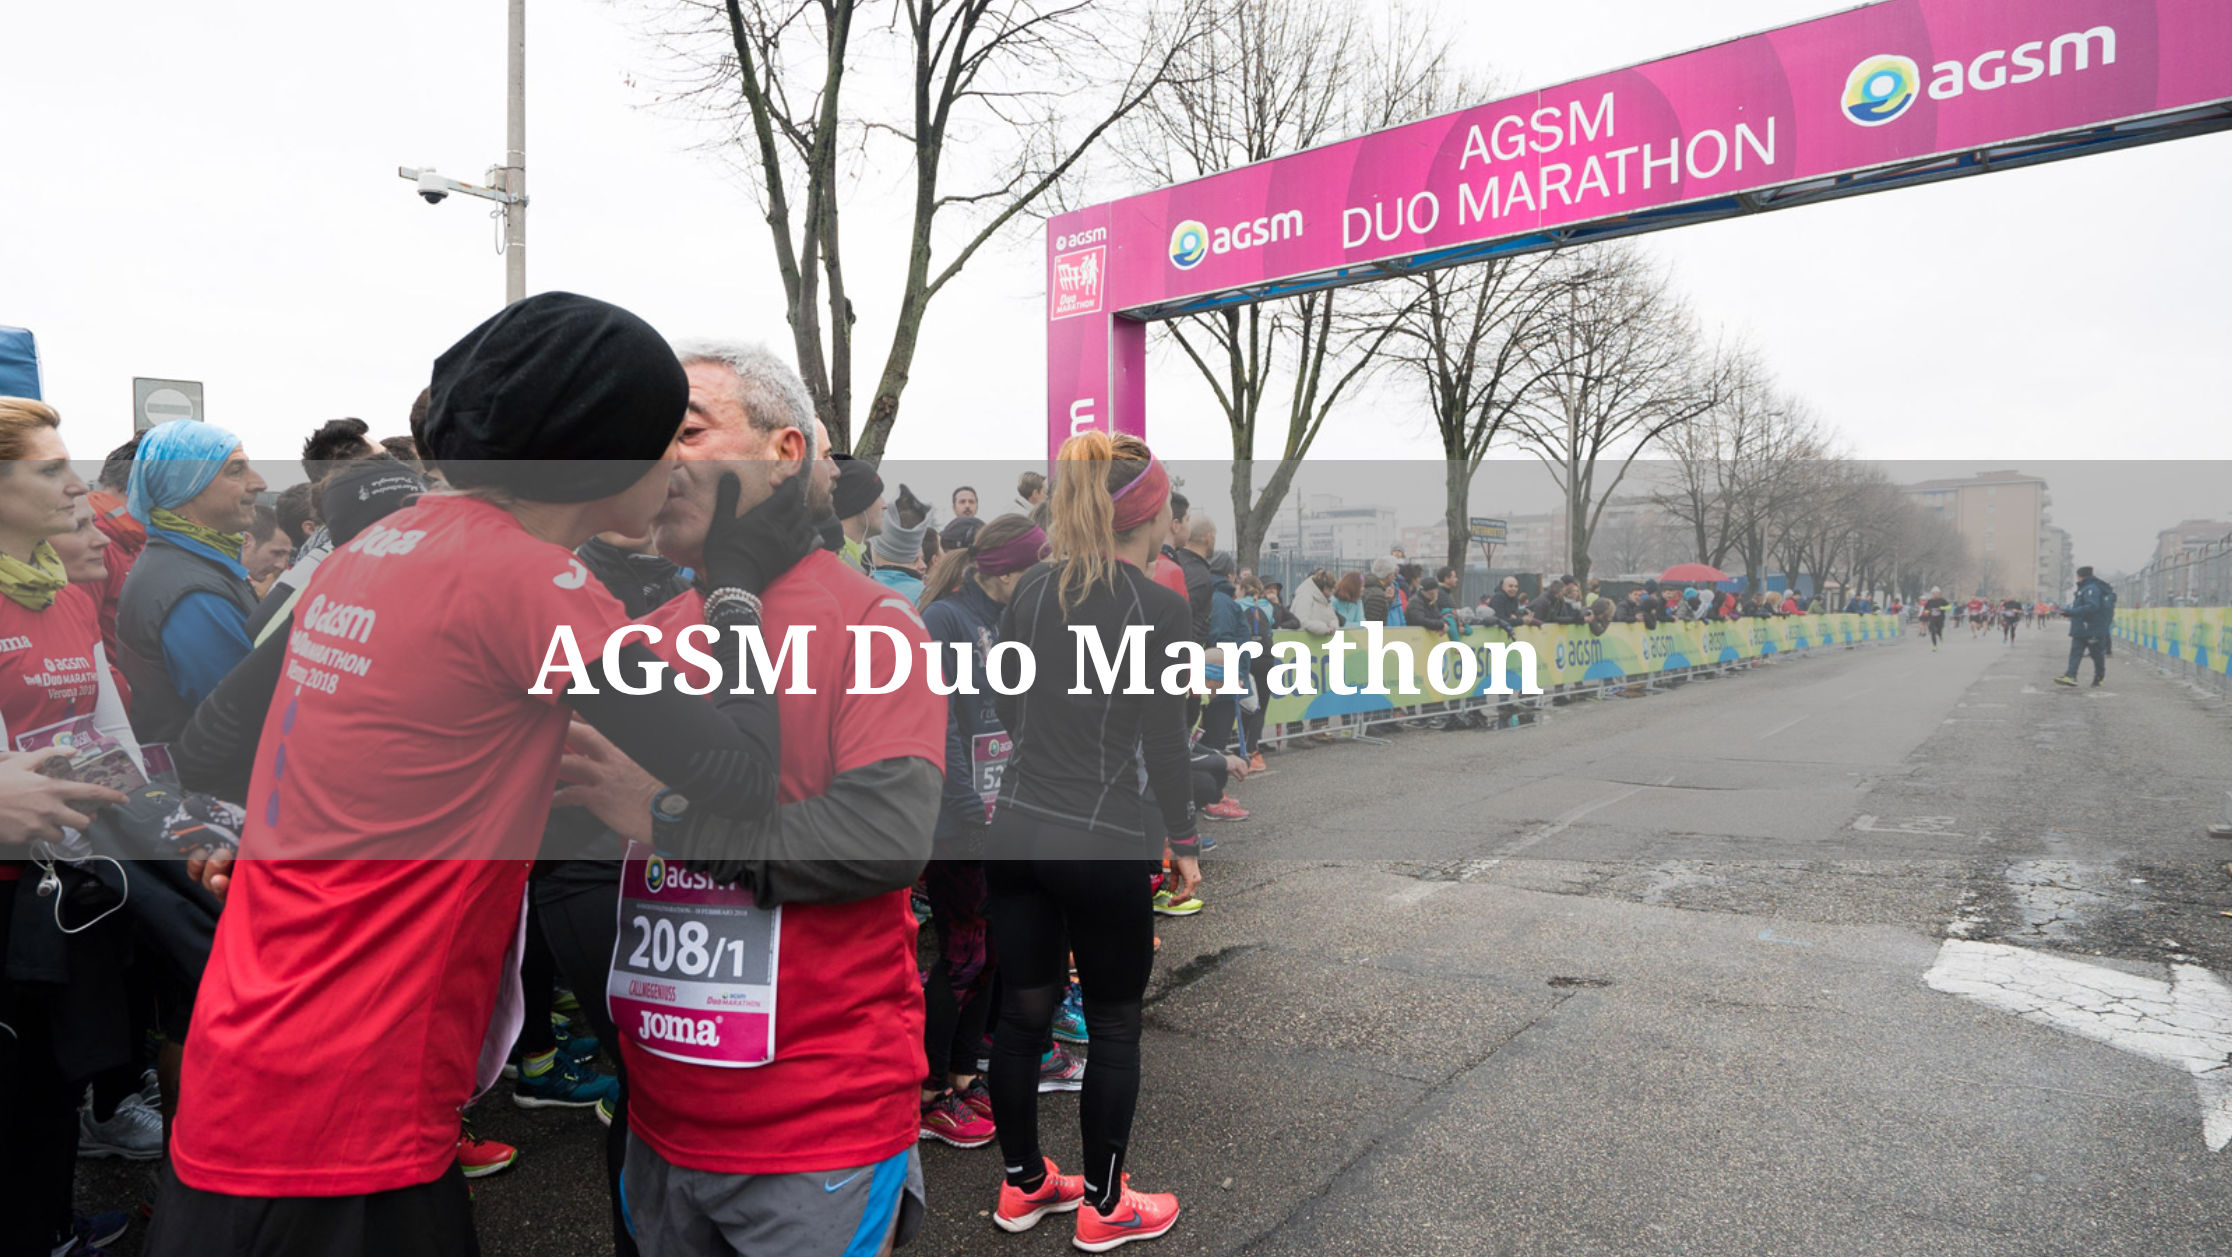 AGSM Duo Marathon 21km